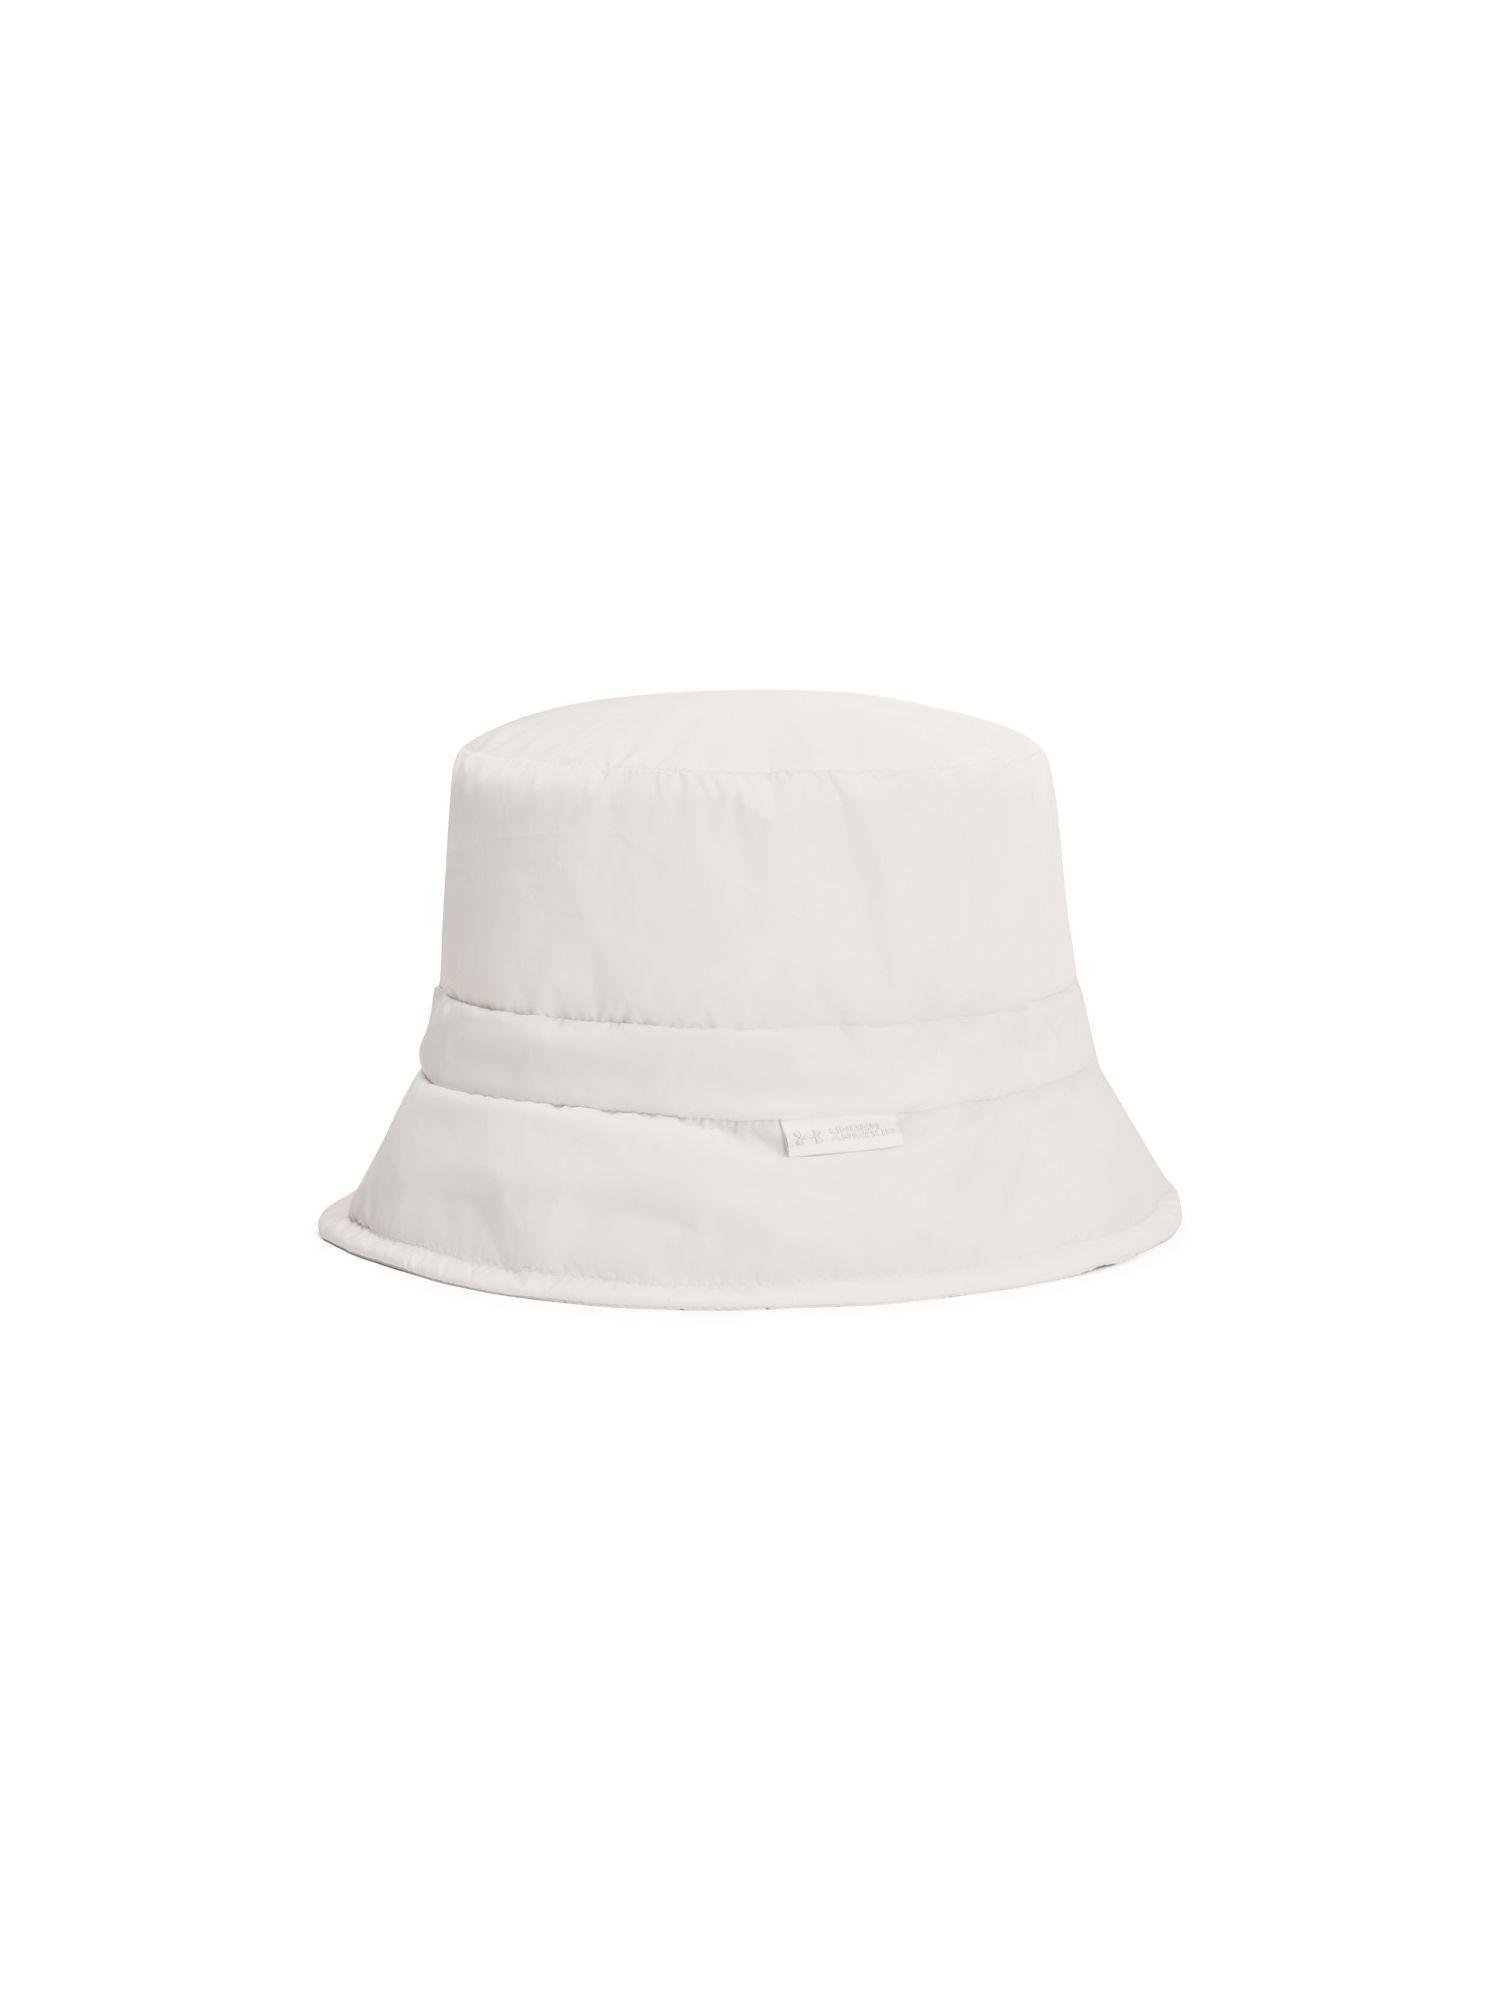 unisex insulated adjustable bucket hat - white